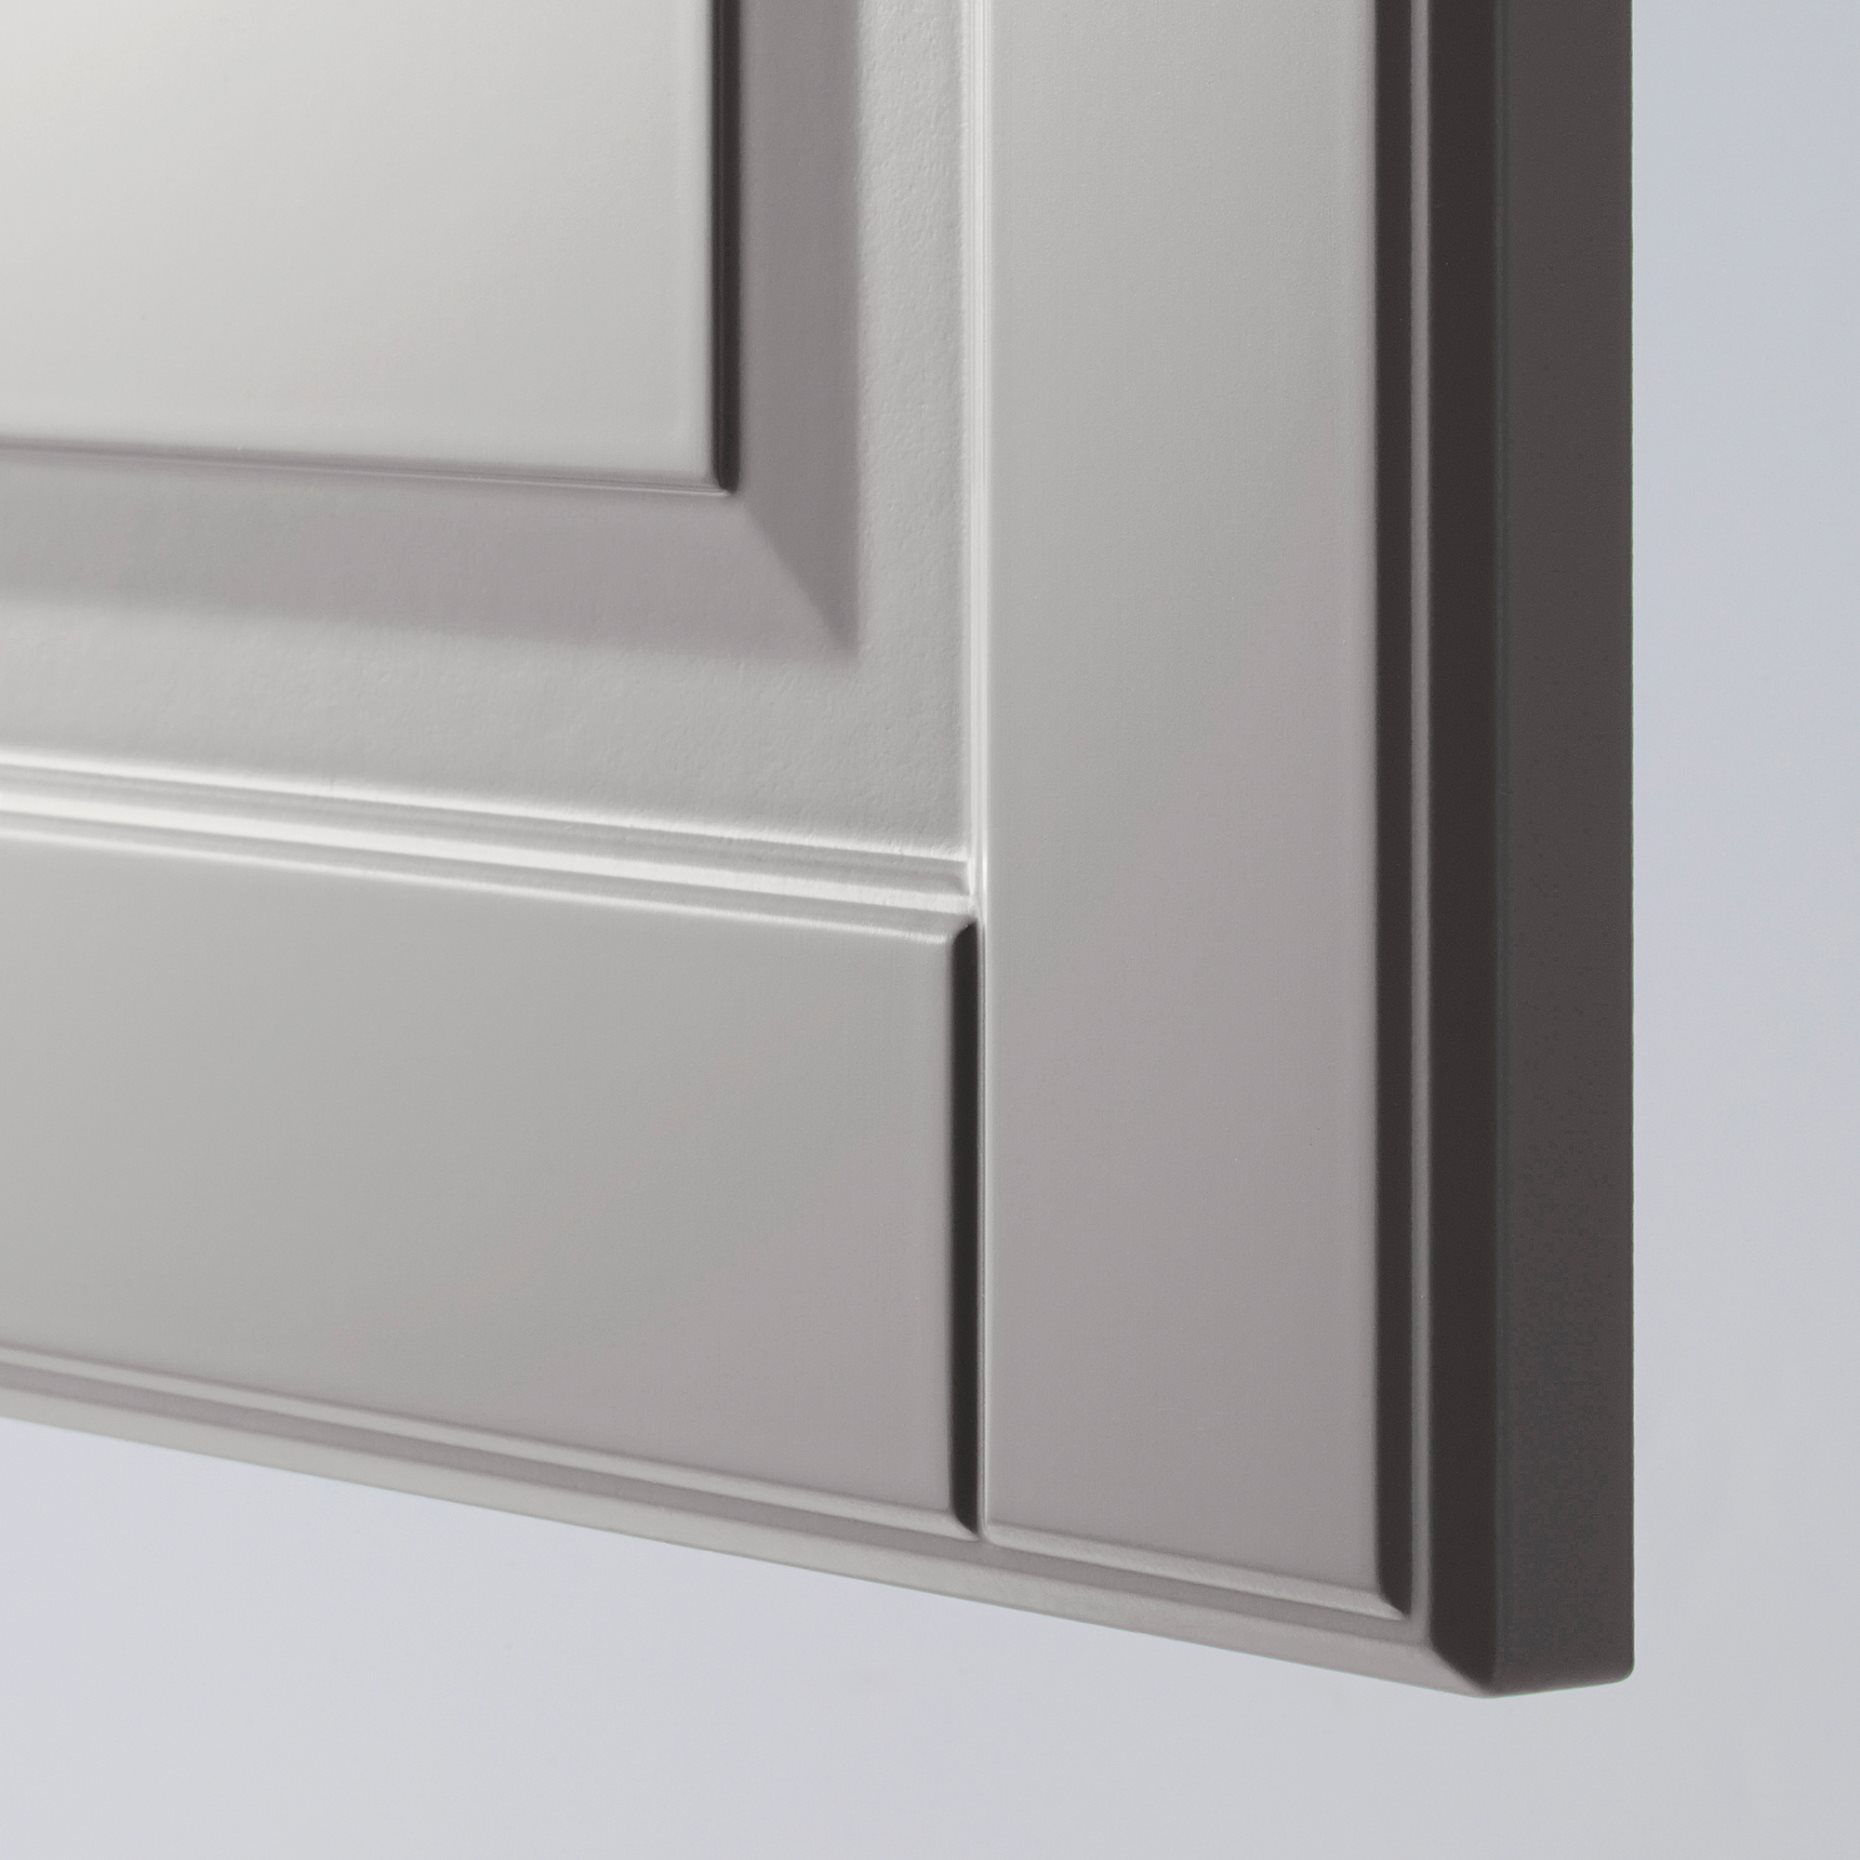 METOD, ντουλάπι βάσης για νεροχύτη με 2 πόρτες/πρόσοψη, 80x60 cm, 194.630.81